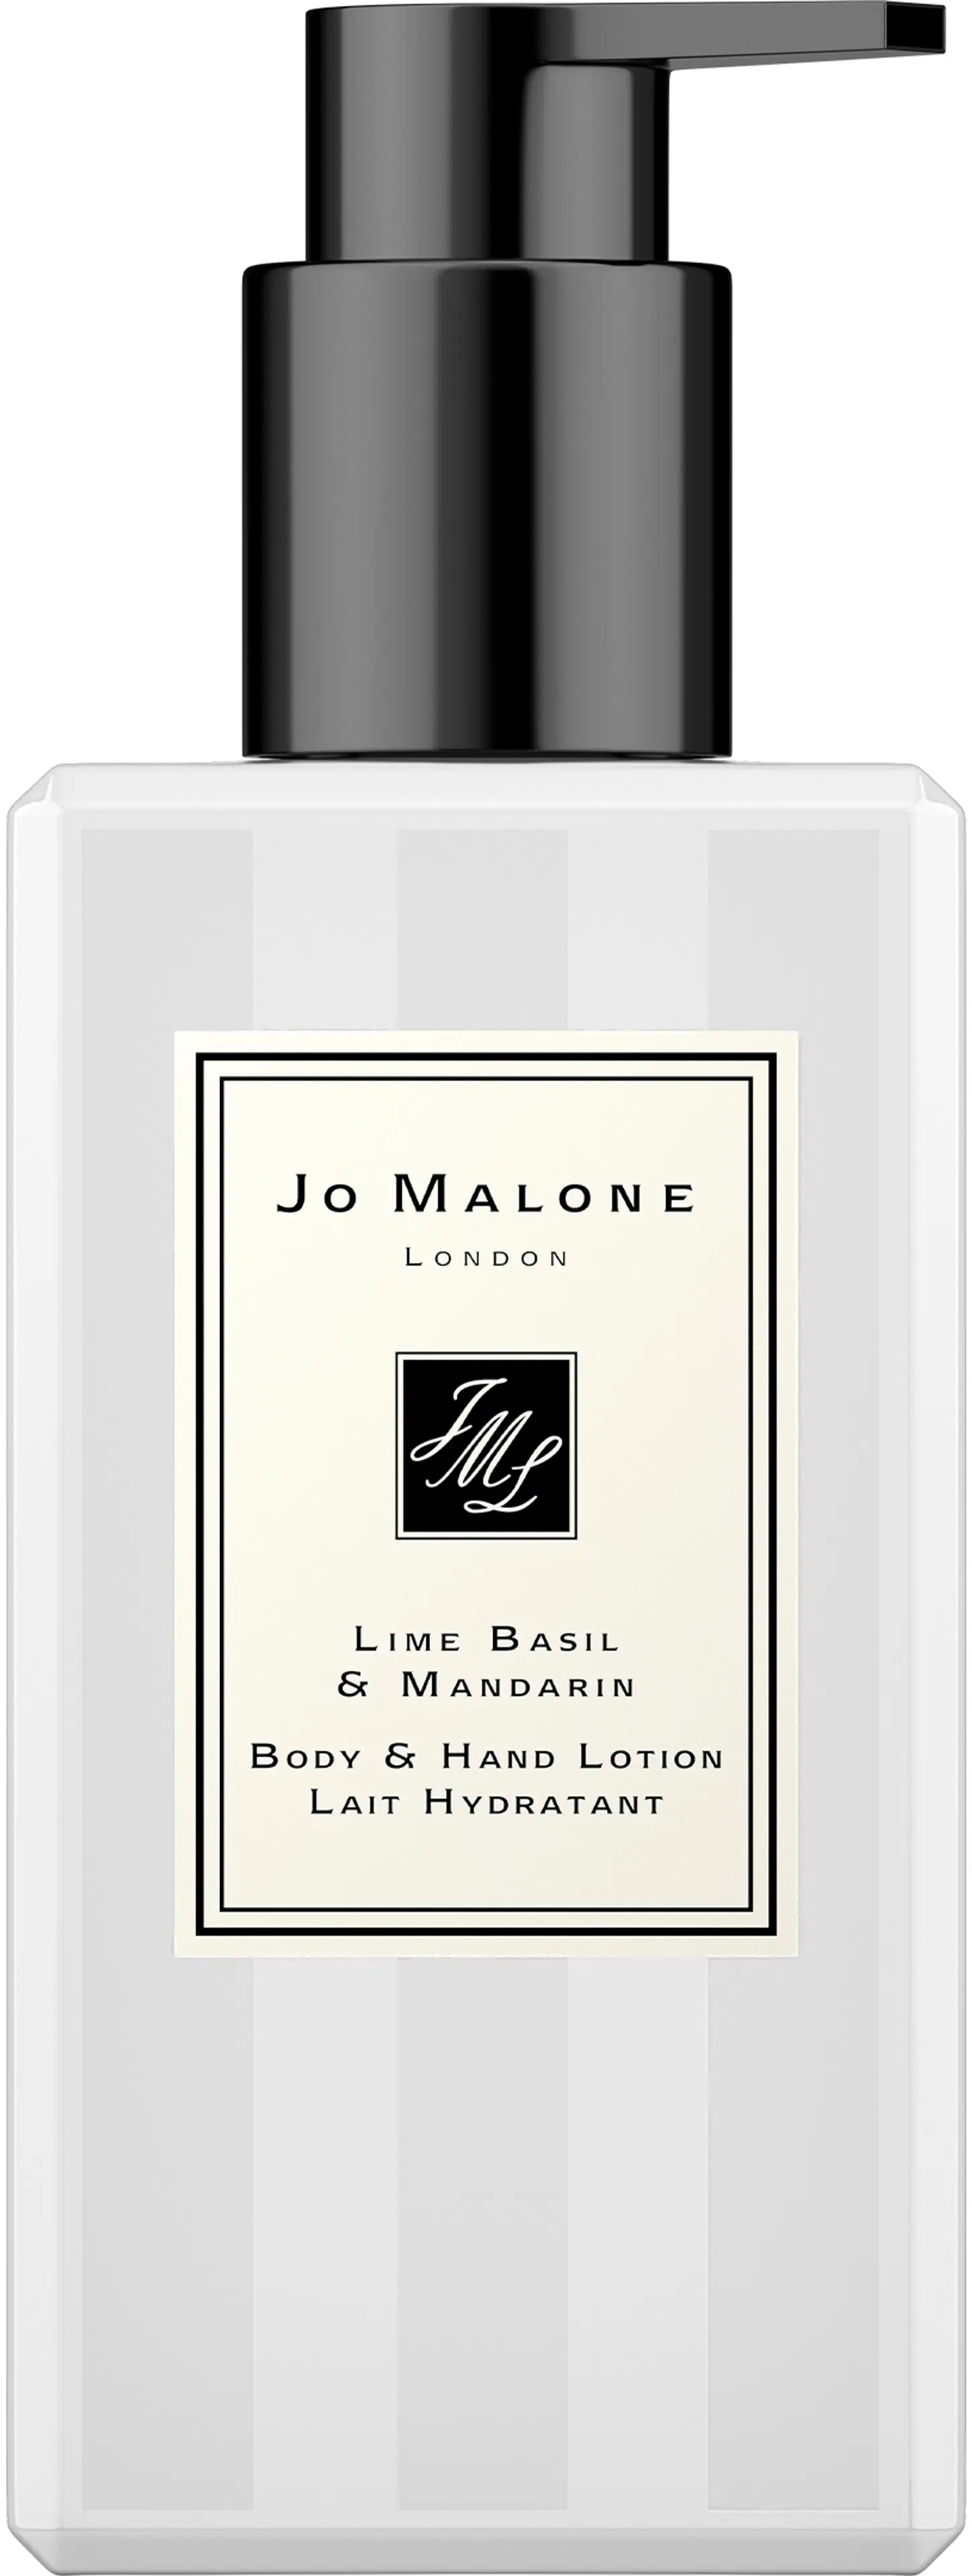 Jo Malone London Lime Basil & Mandarin Body & Hand Lotion vartalo- ja käsivoide 250 ml